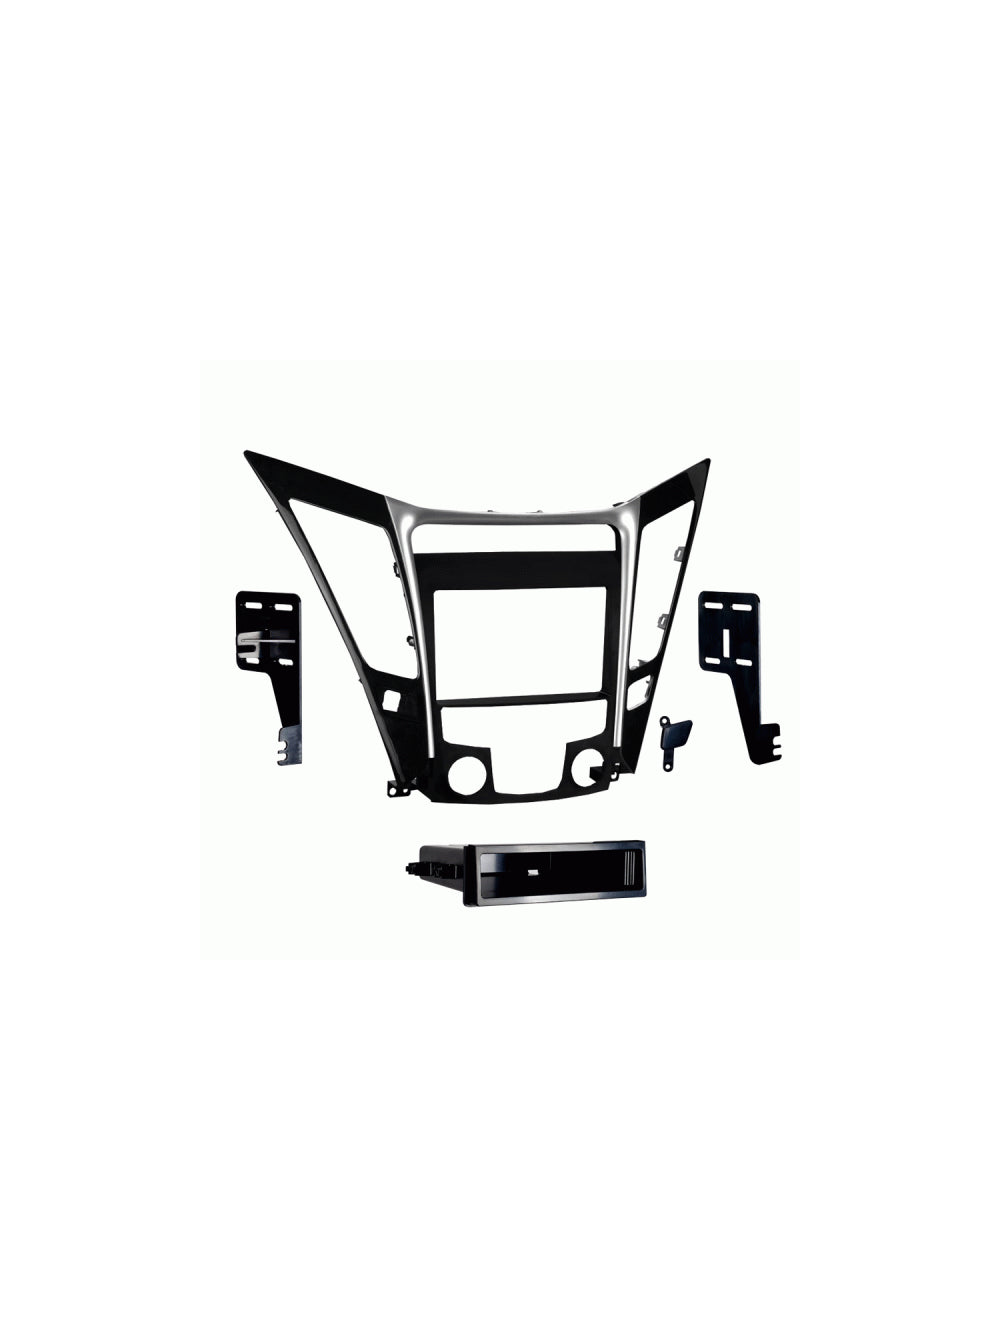 Metra 99-7342 Single/Double DIN Dash Installation Kit for 2011-2014 Hyundai Sonata Vehicles